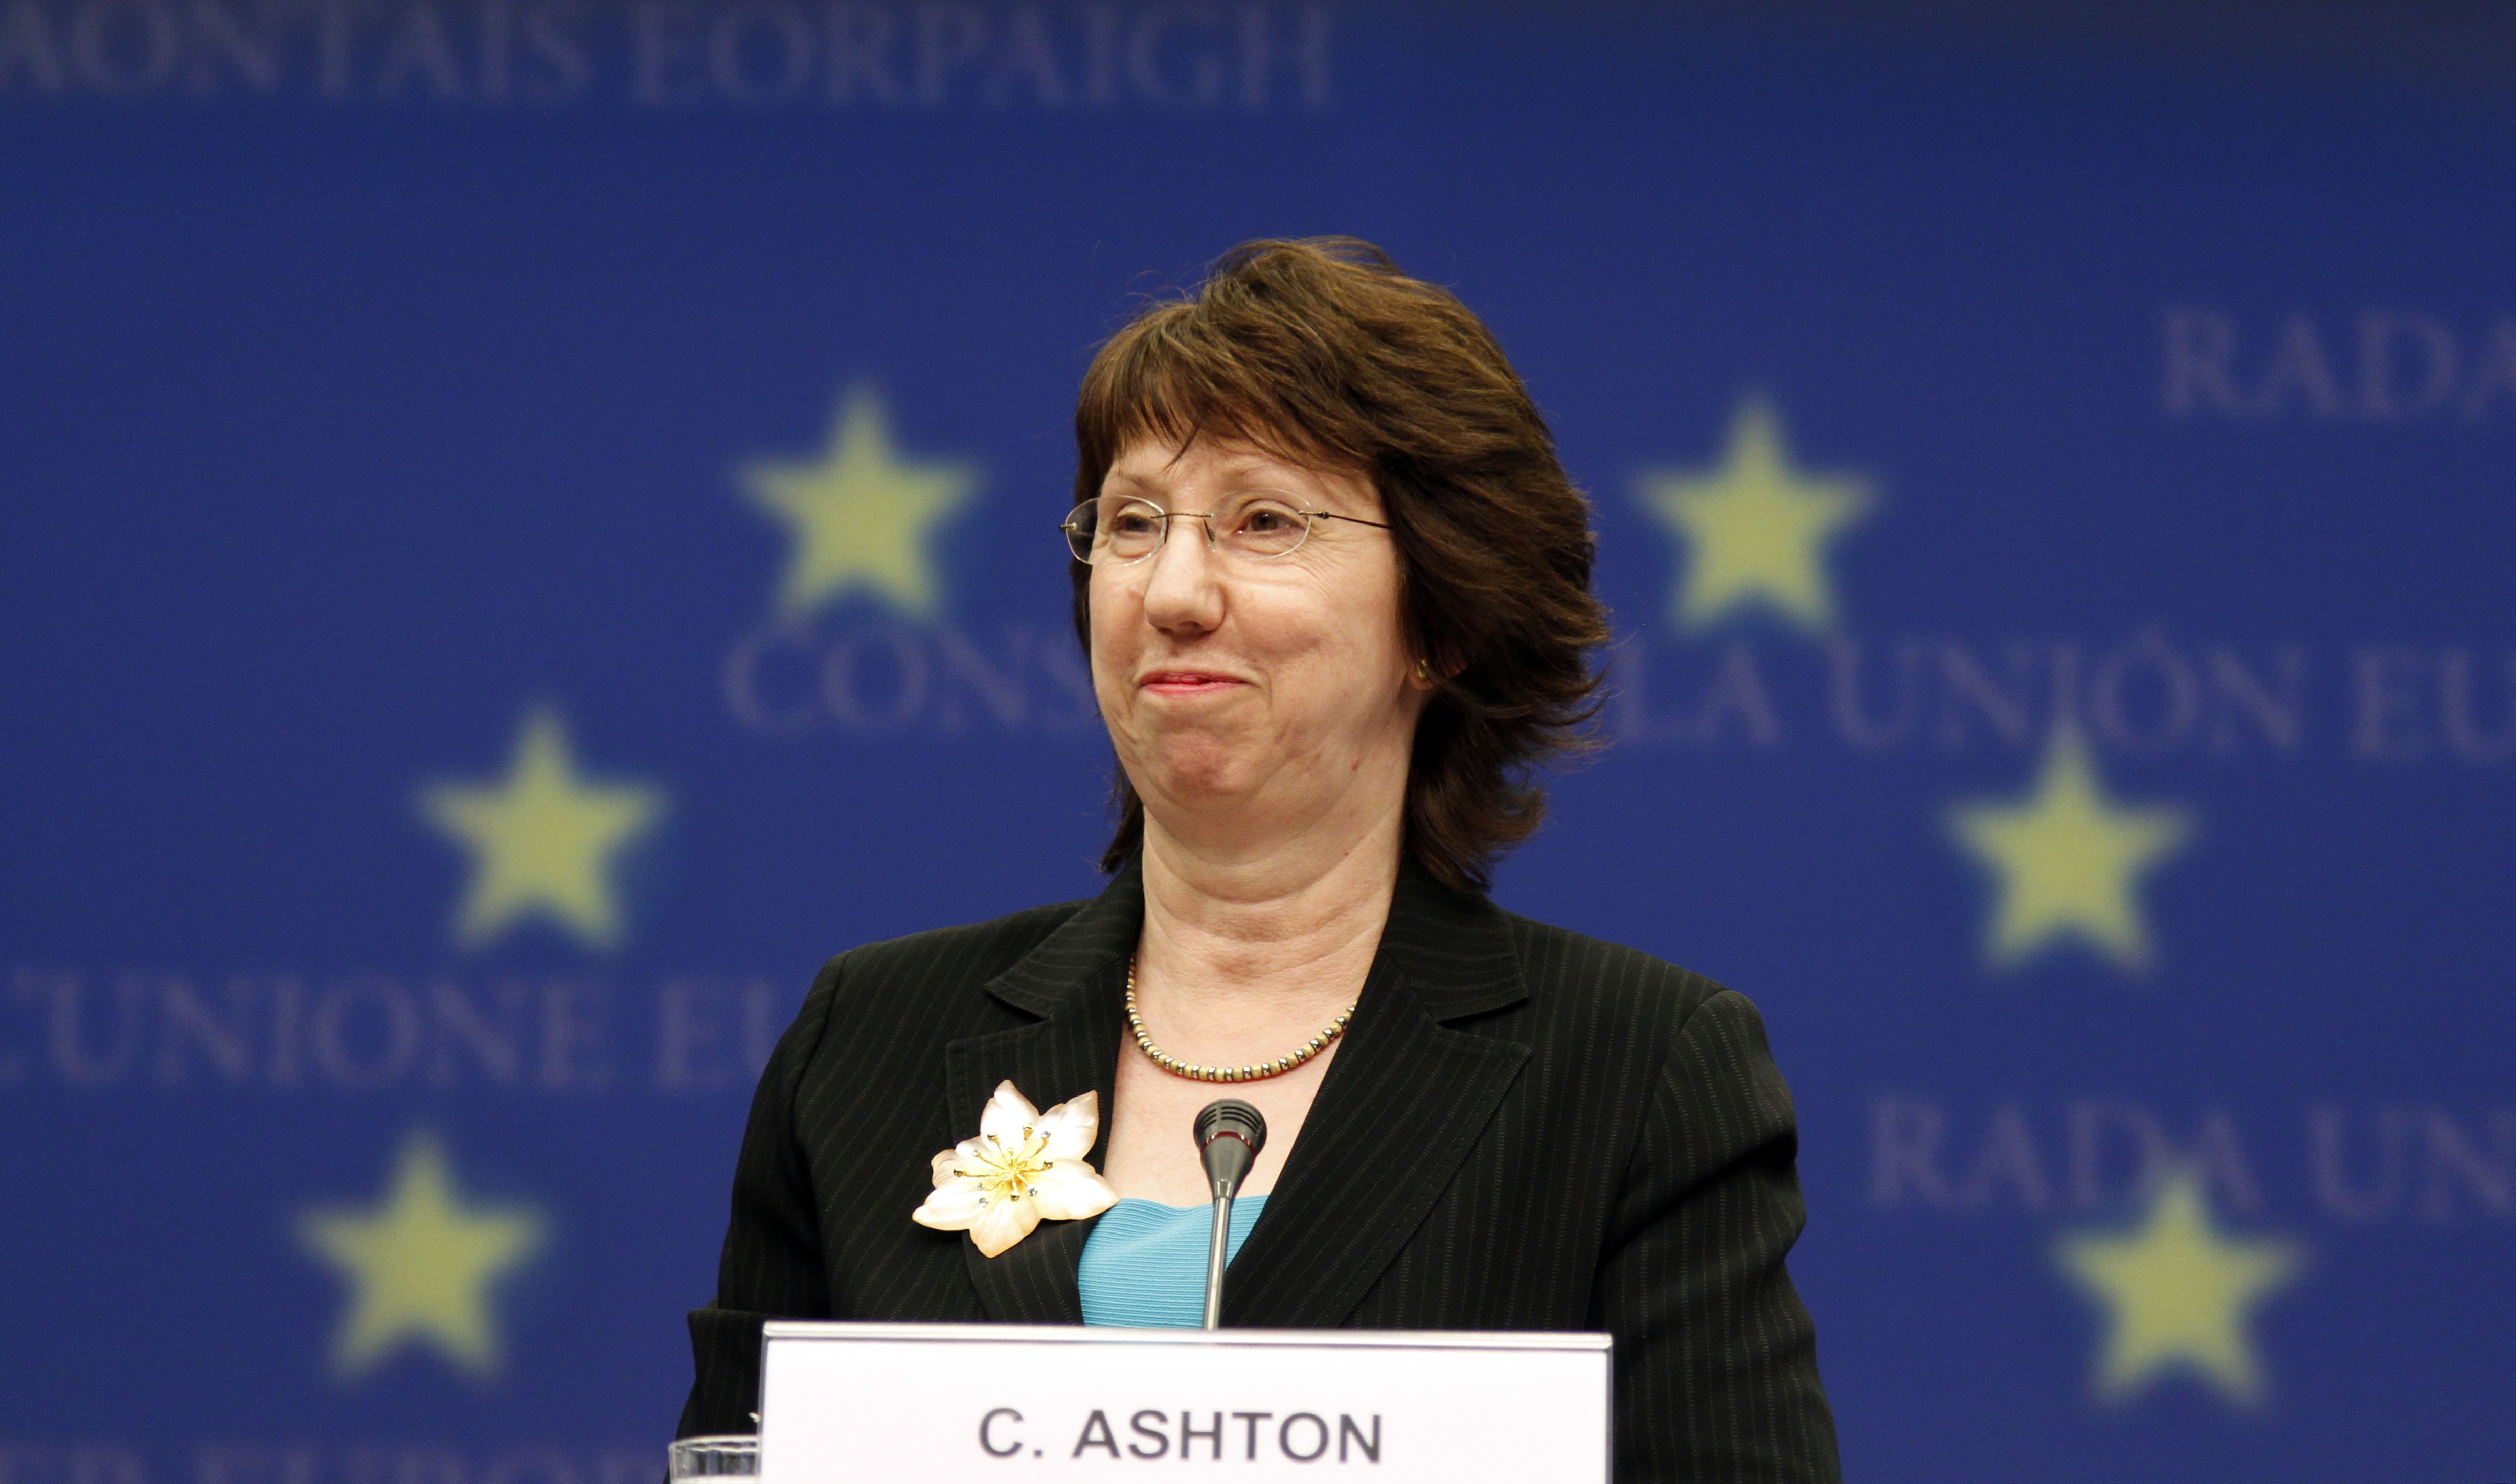 EU, Catherine Ashton, Revolution, Kravaller, Uppror, Hillary Clinton, Kairo, Egypten, Jasminrevolutionen